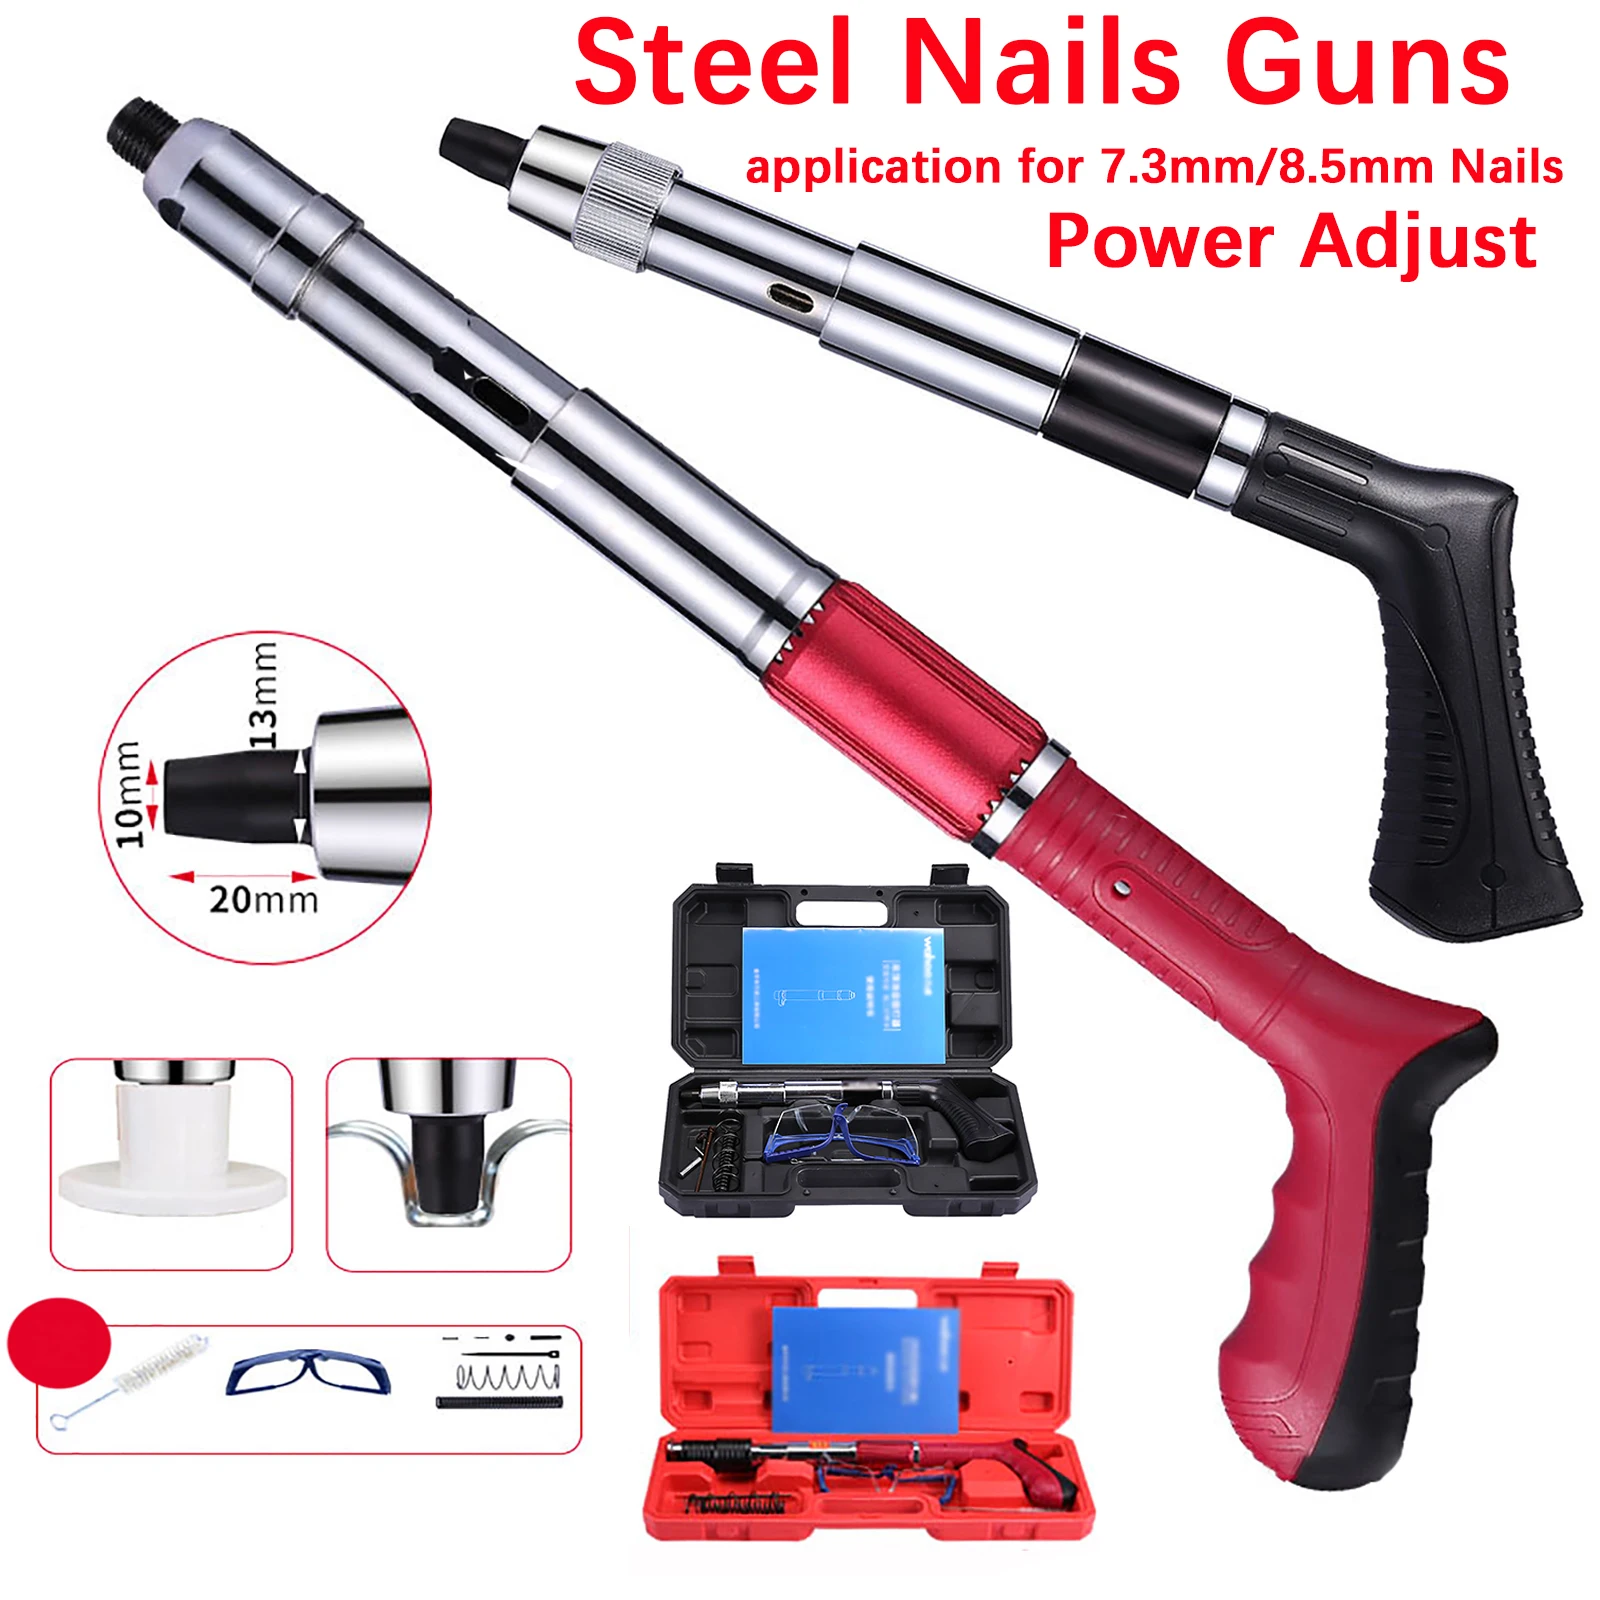 4 Levels Adjust Power Tools Steel Nails Guns Rivet Tool Wall Wire Slotting Device Decoration Rivet Tufting Gun Home Improvement